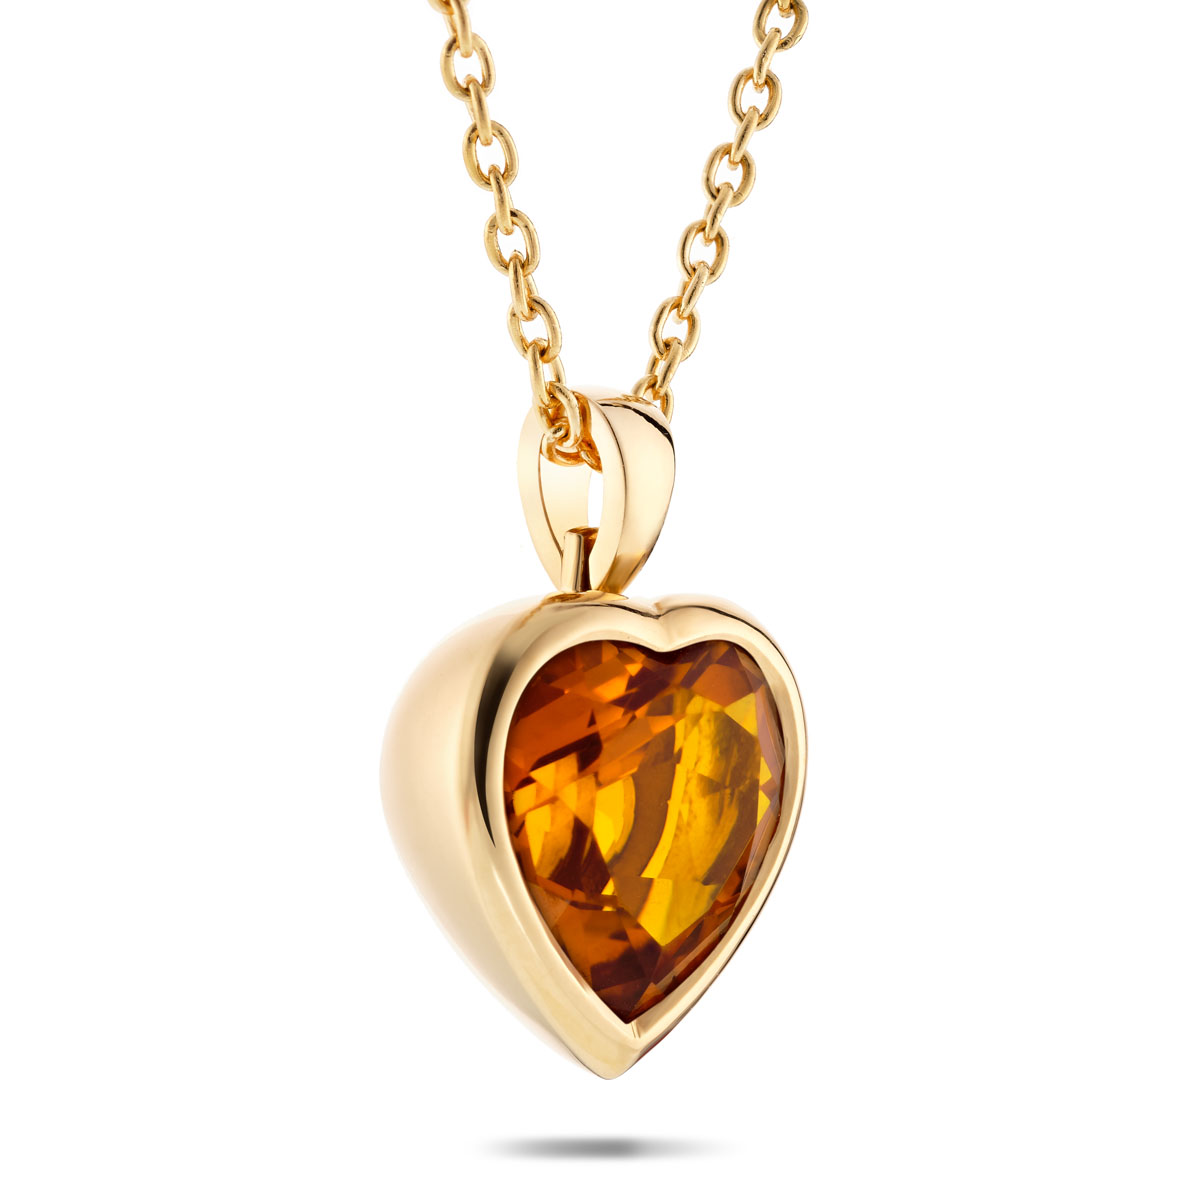 Heart shaped Golden Citring Love Heart pendant necklace